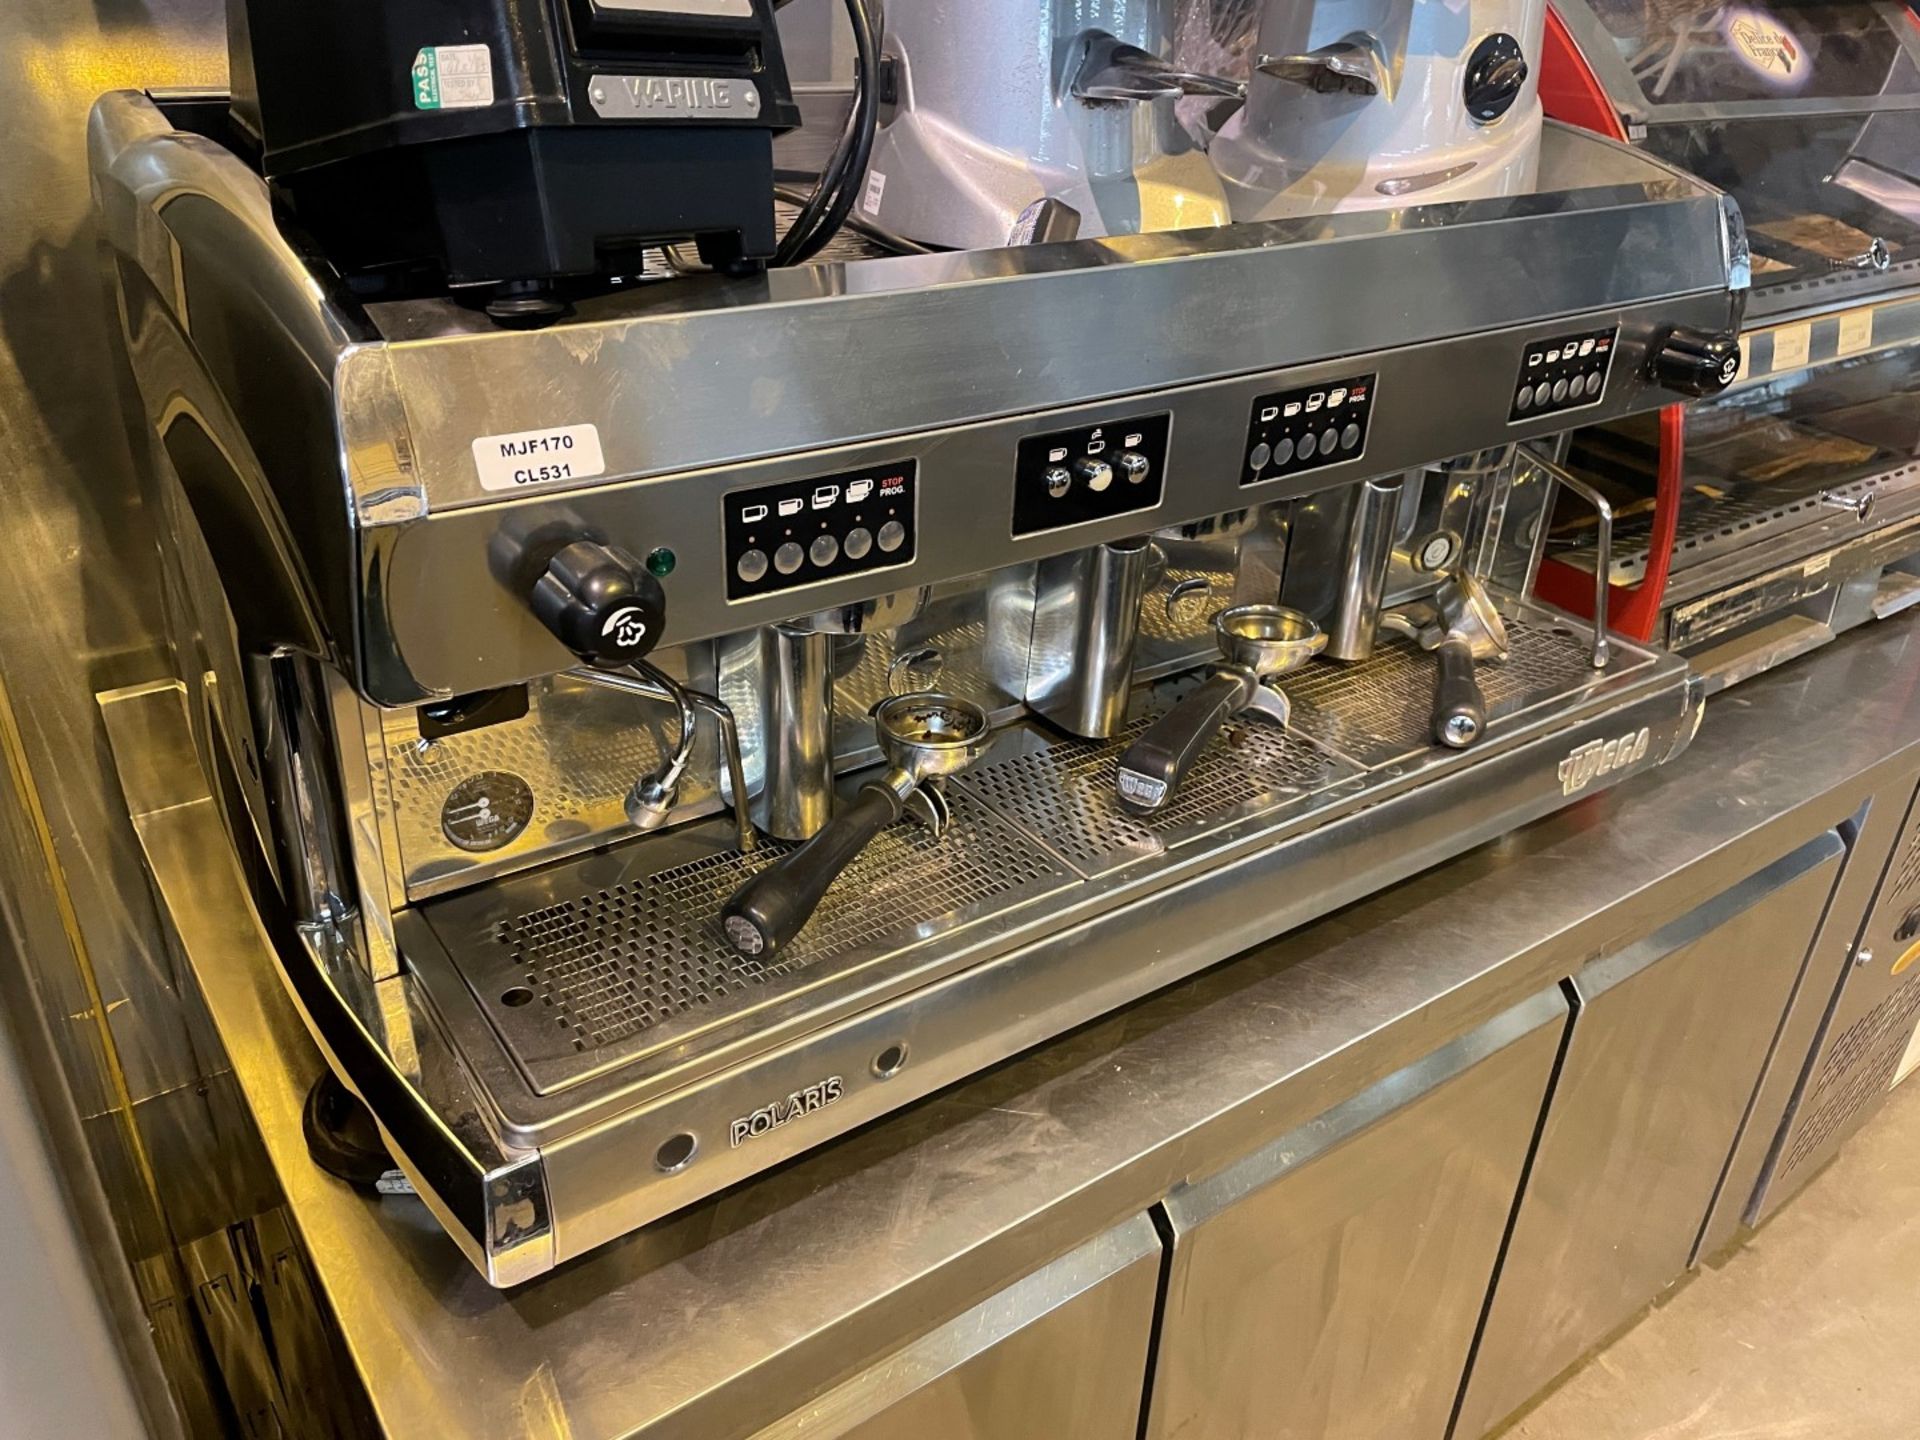 1 x Polaris Wega 3 Group Commercial Espresso Coffee Machine - Stainless Steel Finish - Approx 100cms